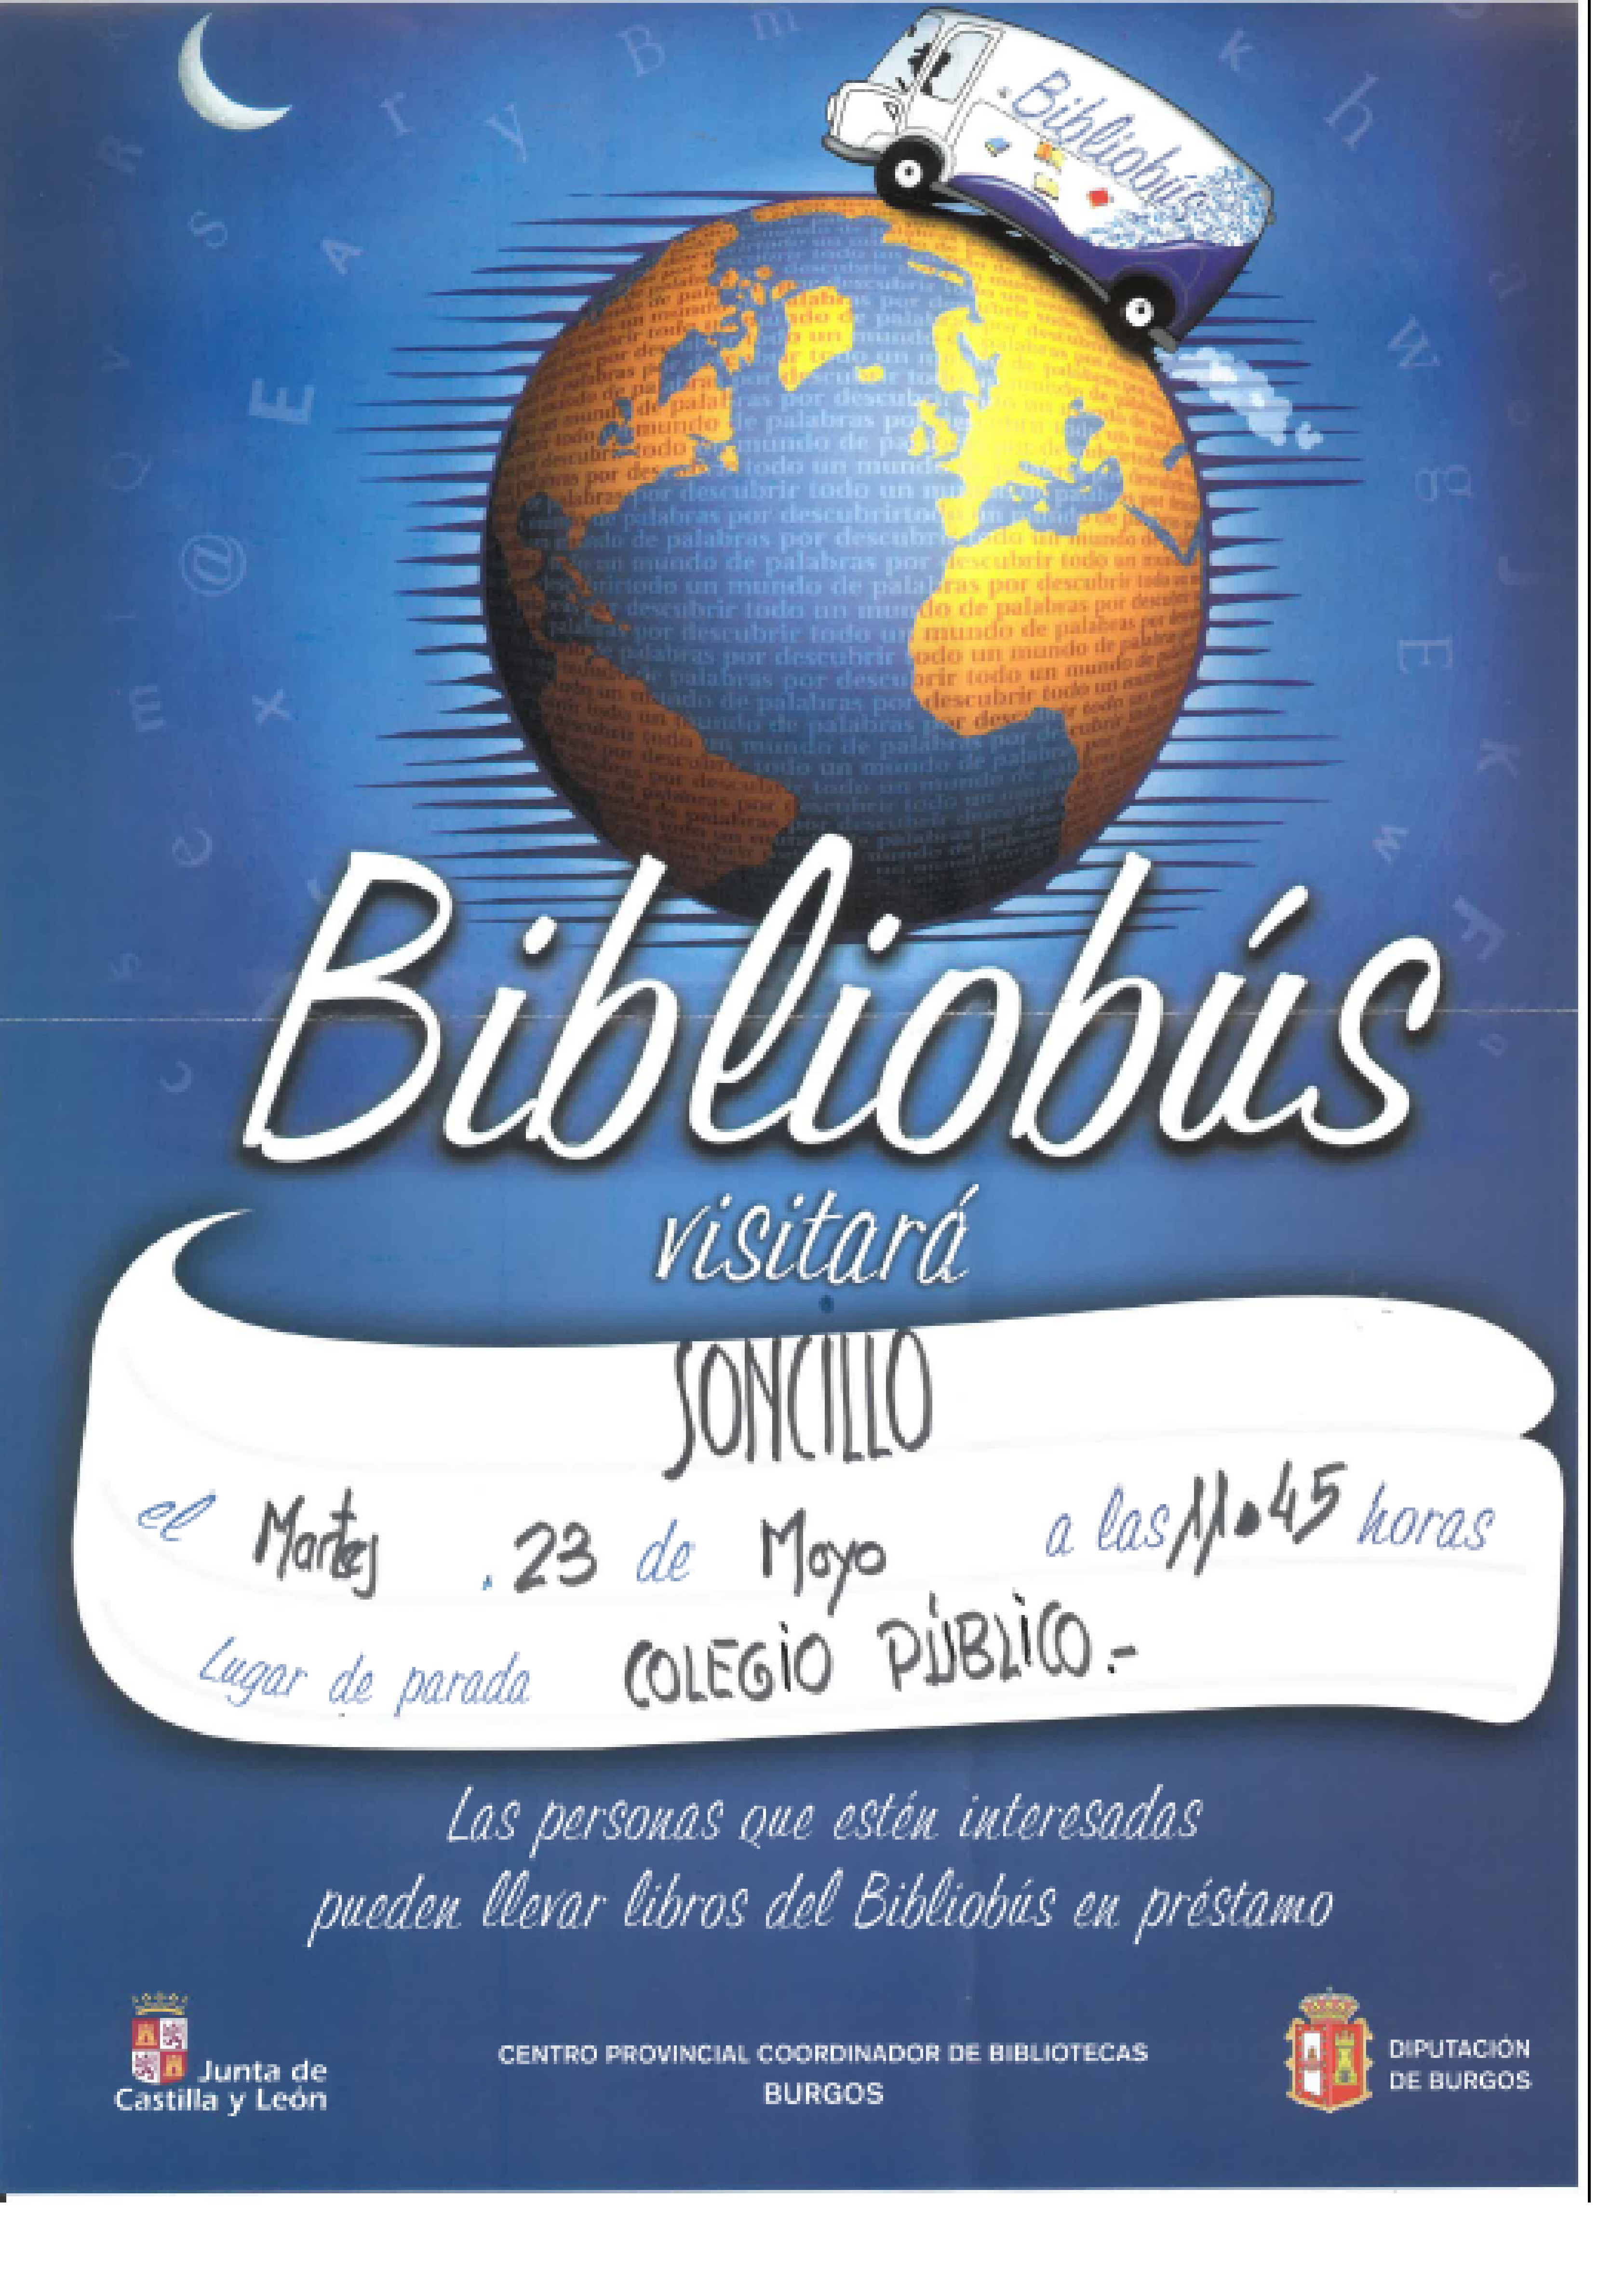 "BIBLIOBUS 23 DE MAYO "